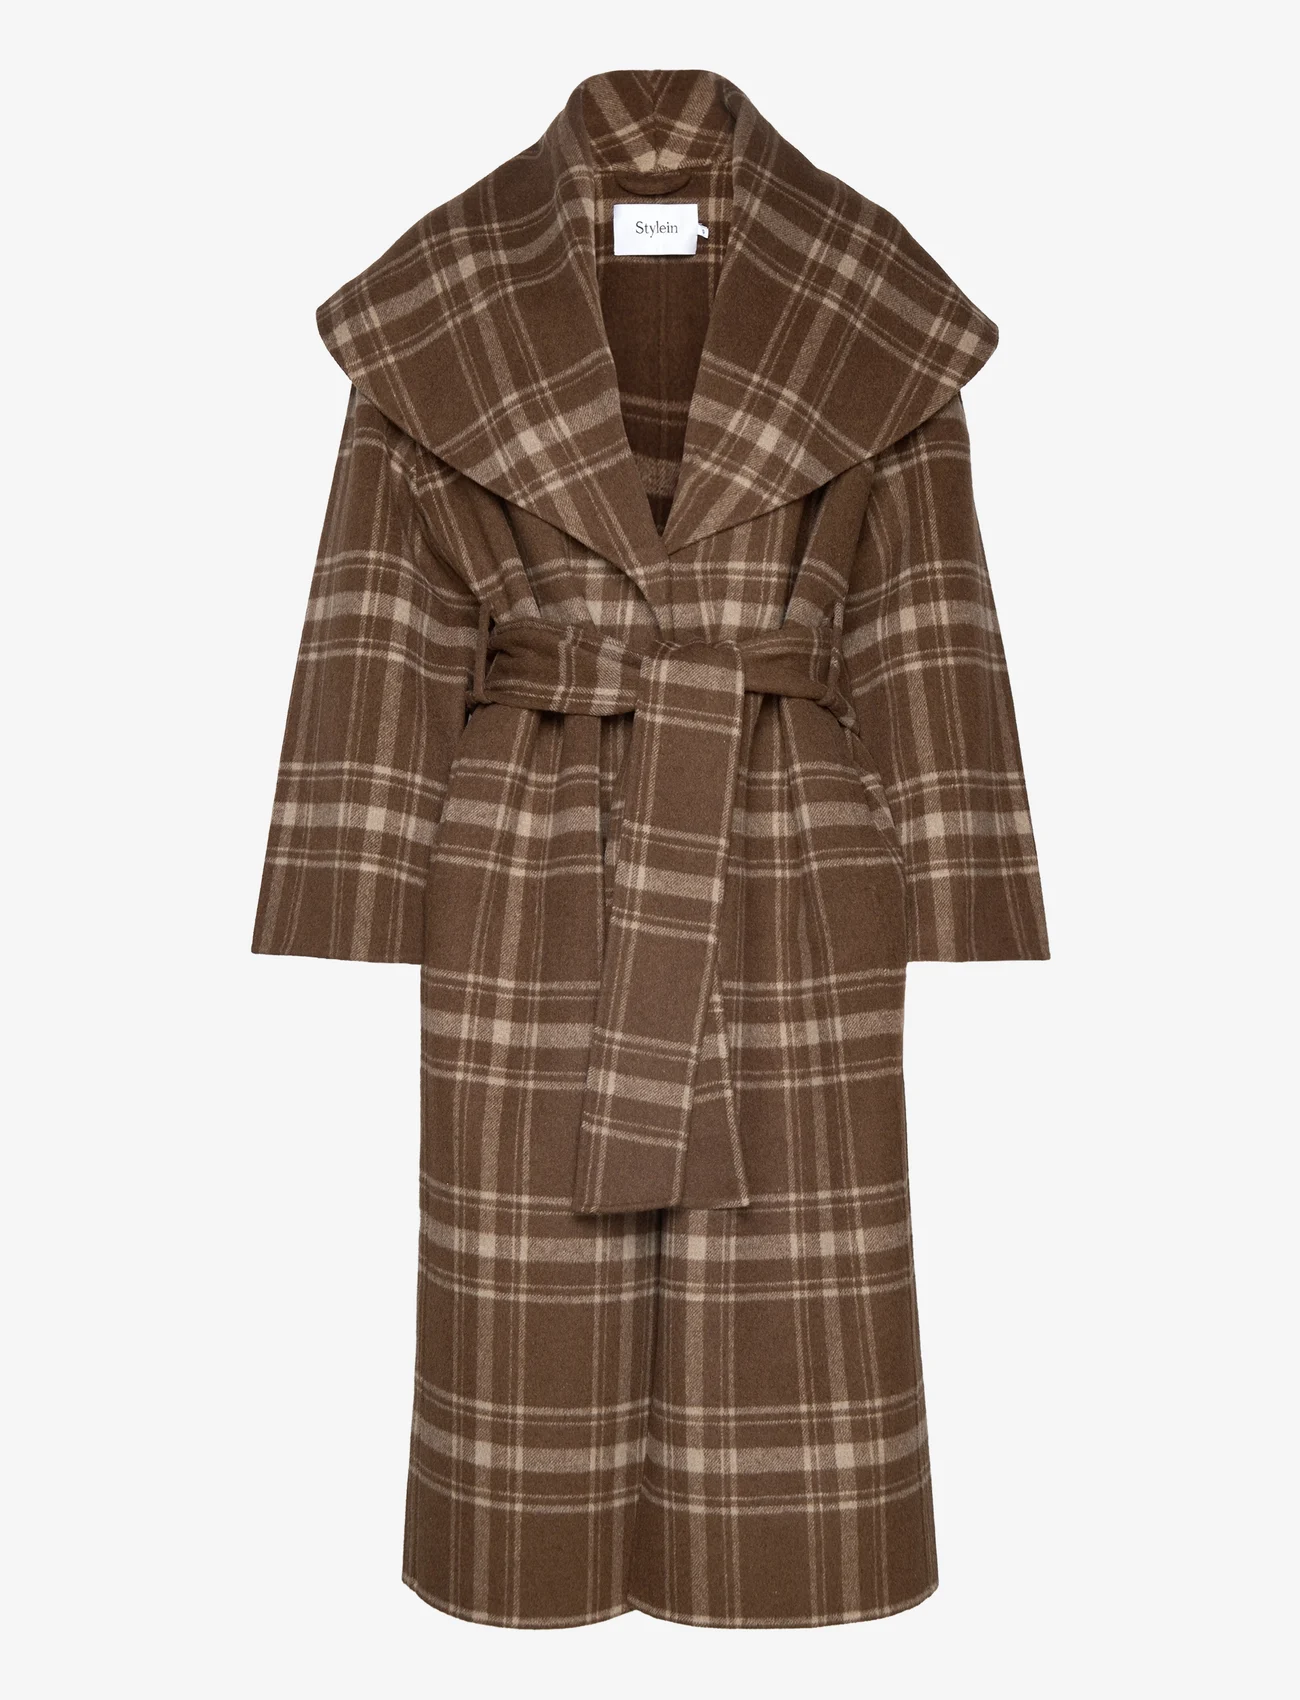 Stylein - TERMOLI COAT - winter coats - brown check - 0